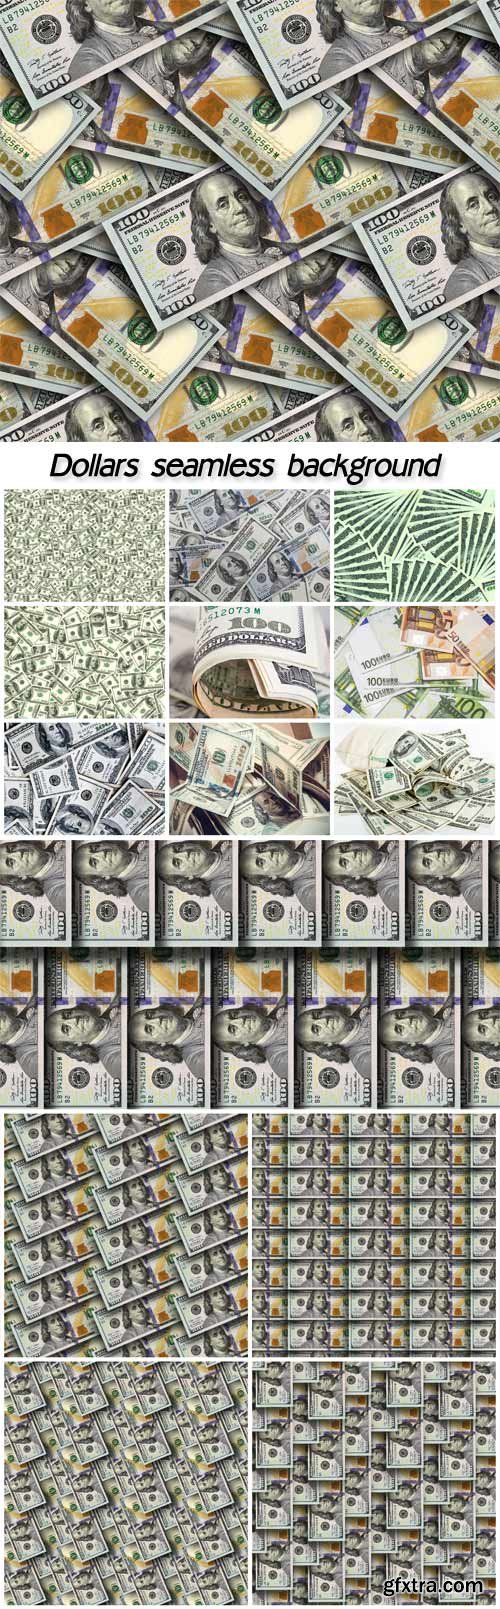 Dollars seamless background